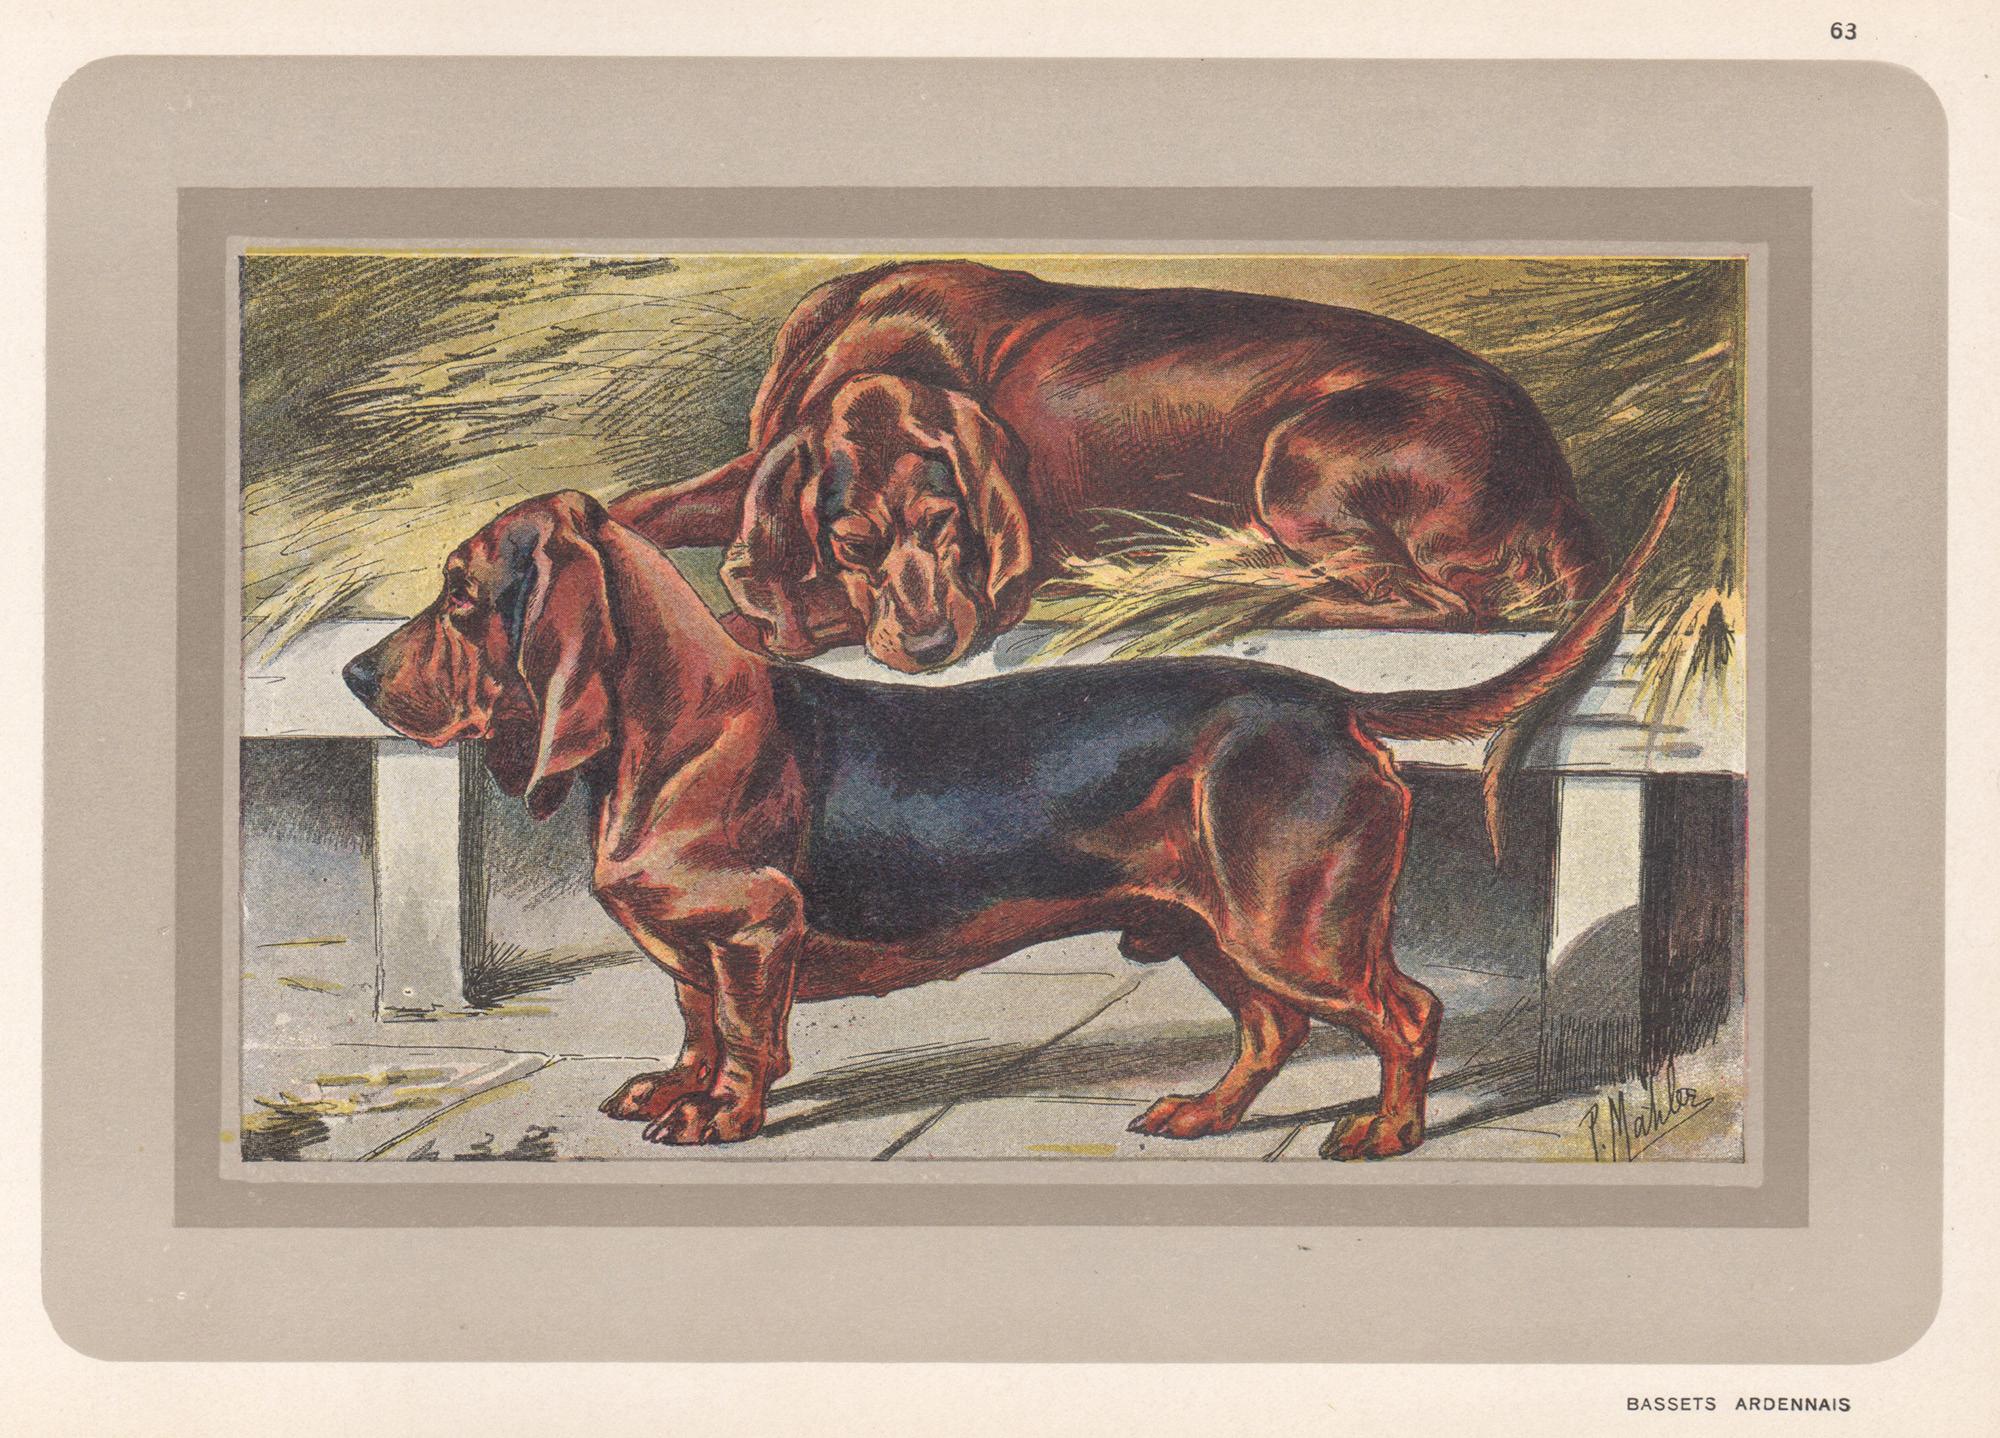 P. Mahler Animal Print - Bassets Ardennais, French hound dog chromolithograph print, 1930s